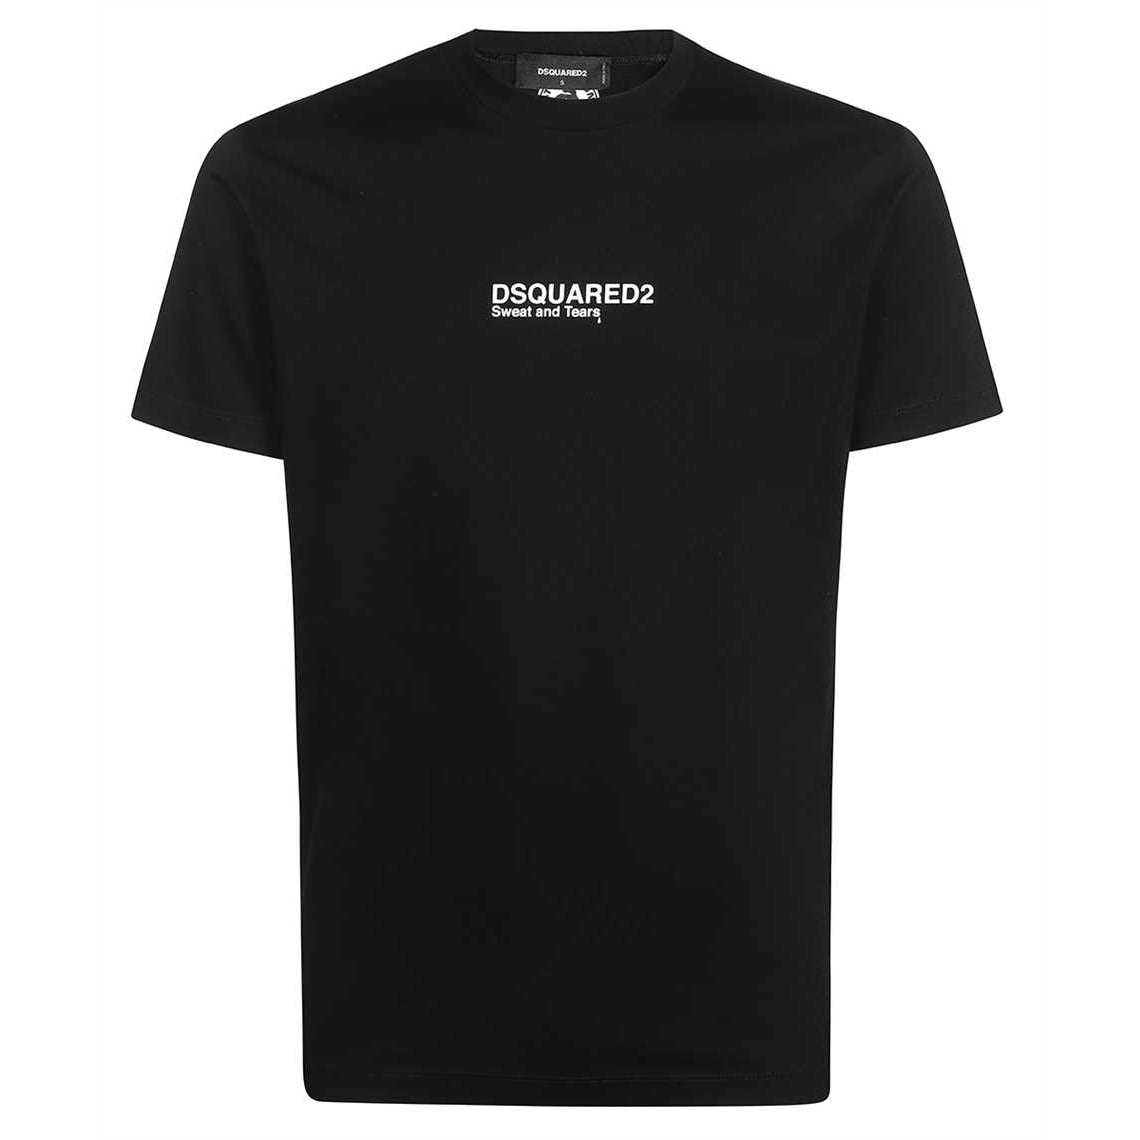 Dsquared2 Men&#39;s Mini Logo &quot;Sweat &amp; Tears&quot; T-Shirt Black